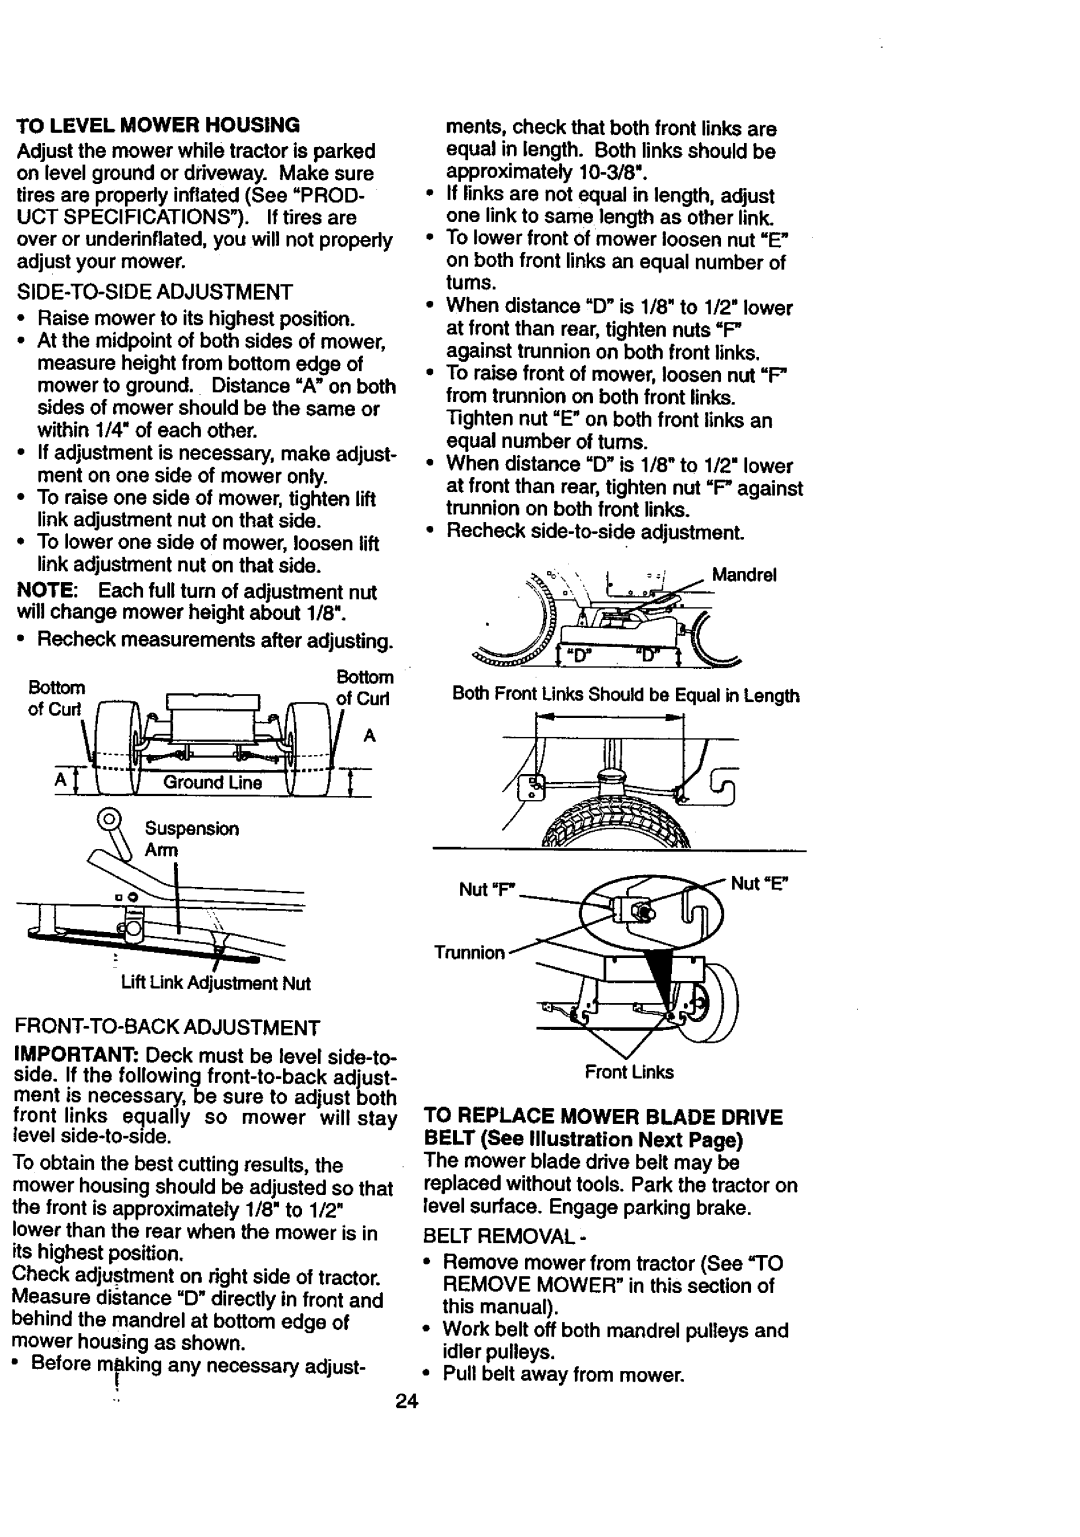 Craftsman 917.27084 manual To Levelmowerhousing 